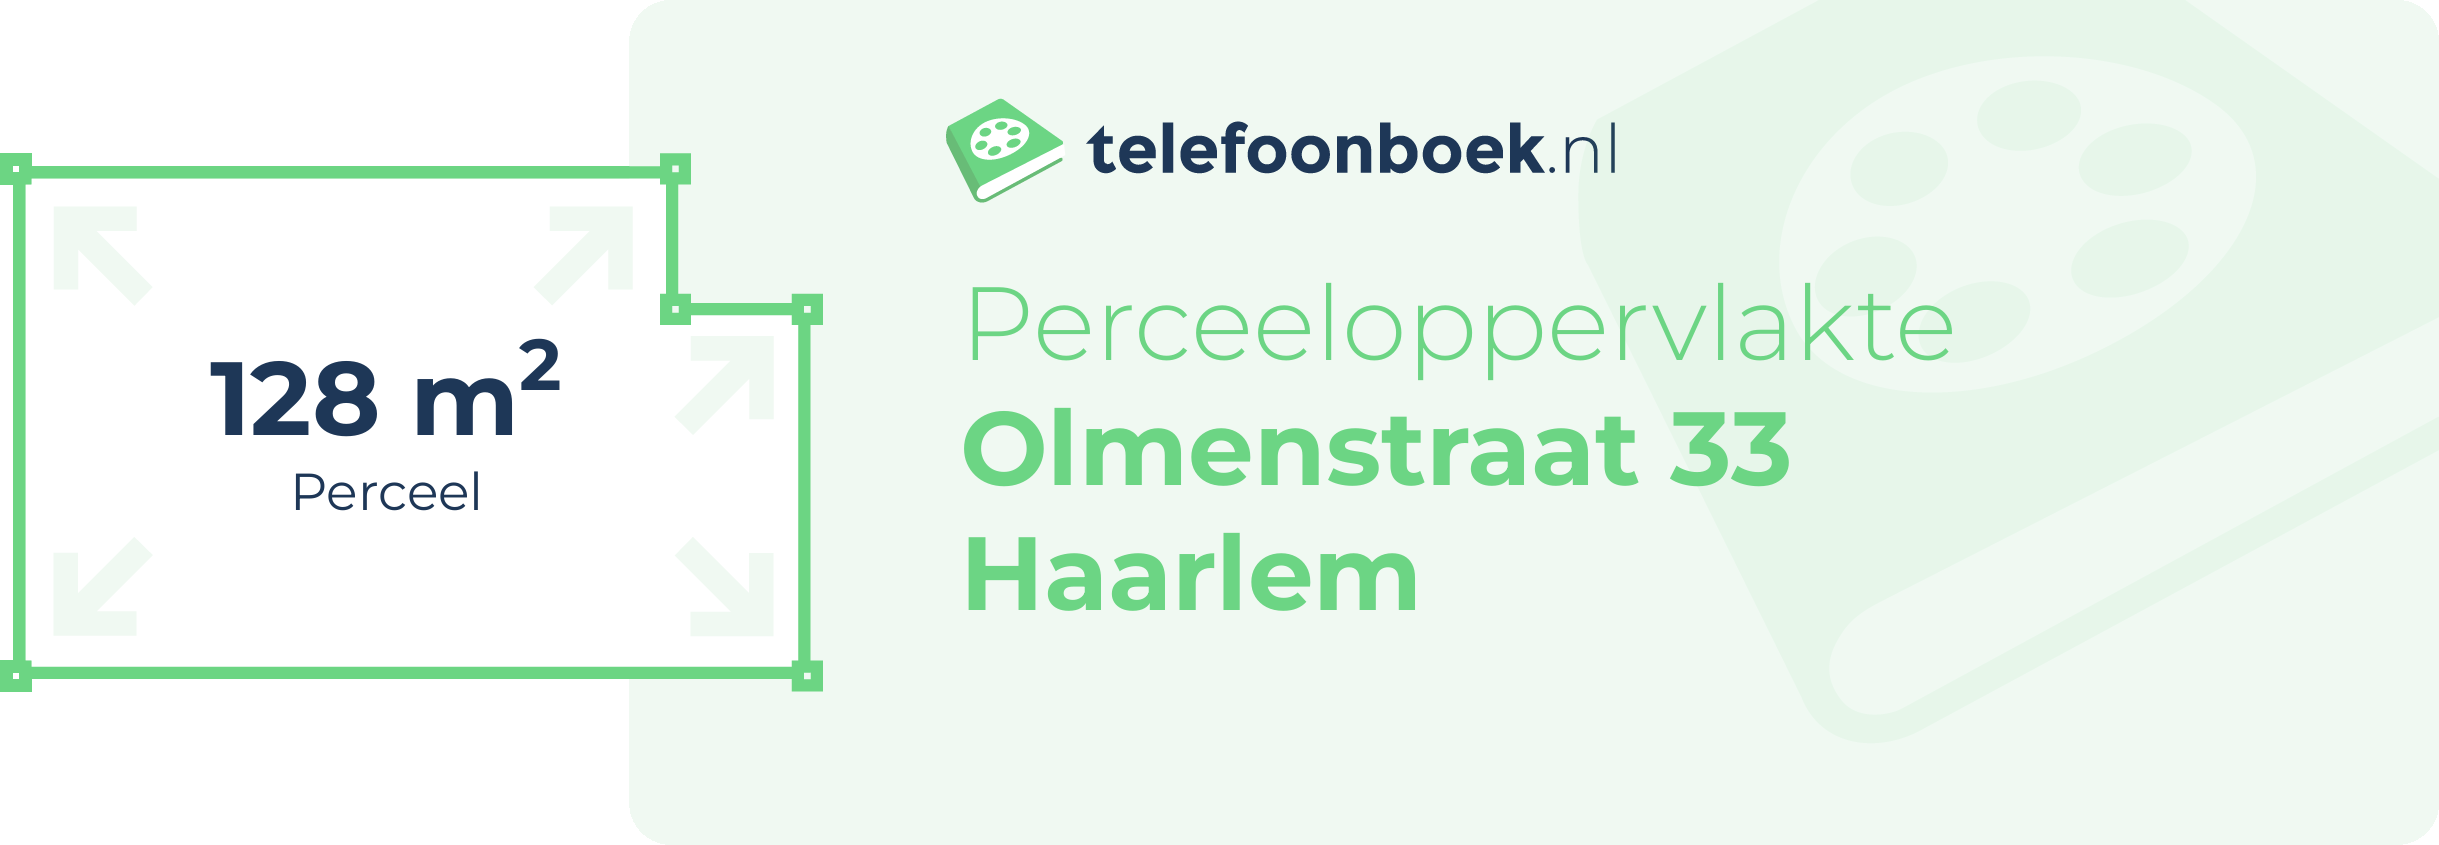 Perceeloppervlakte Olmenstraat 33 Haarlem